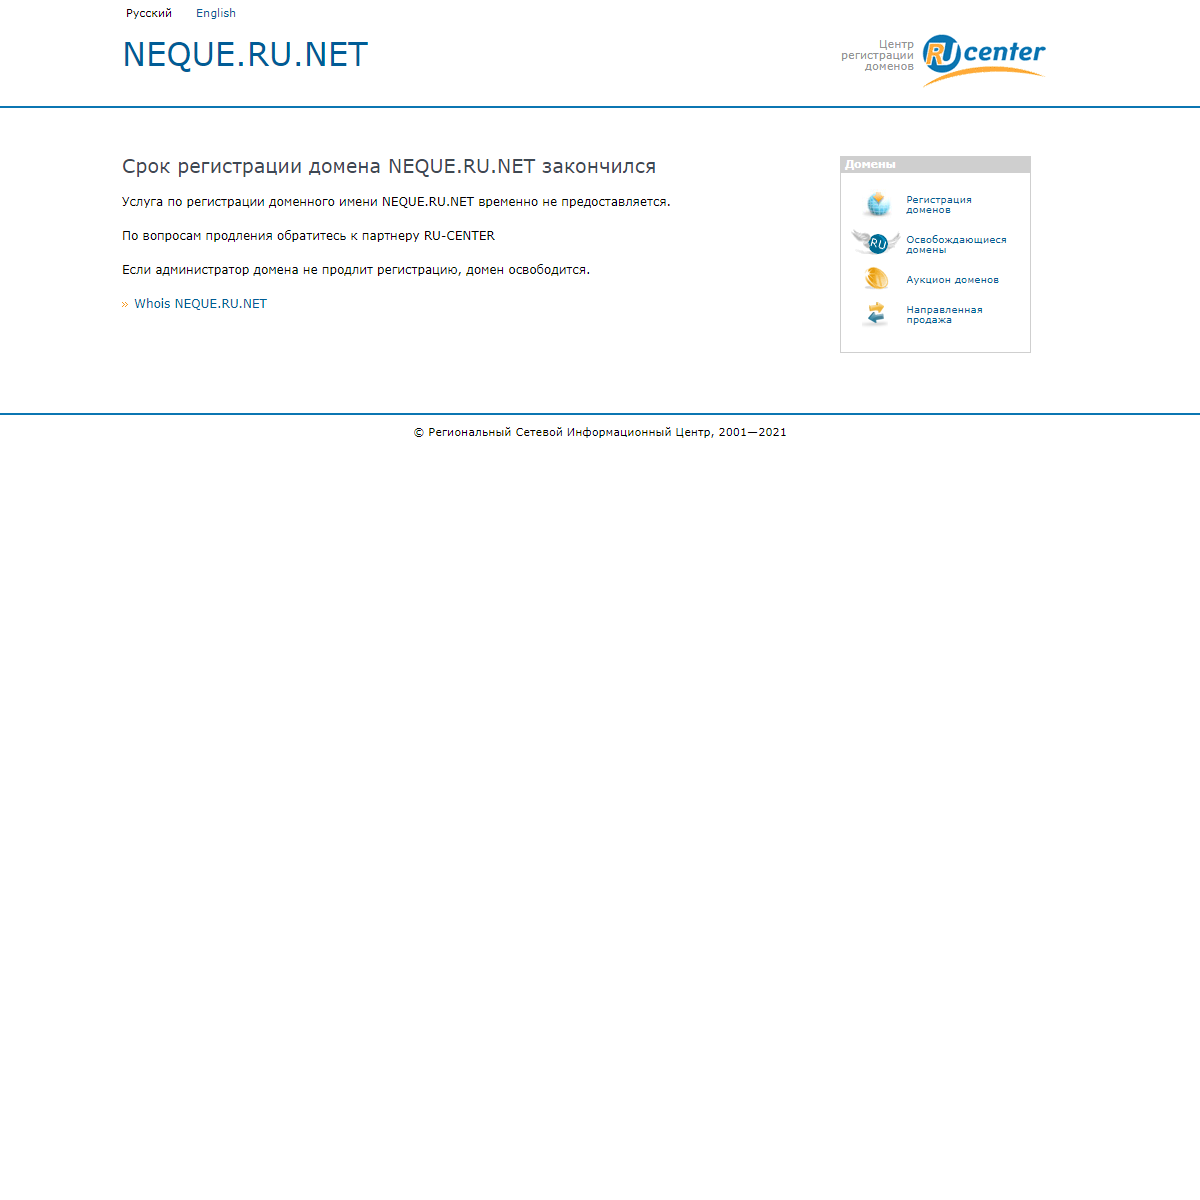 A complete backup of http://neque.ru.net/v/47064